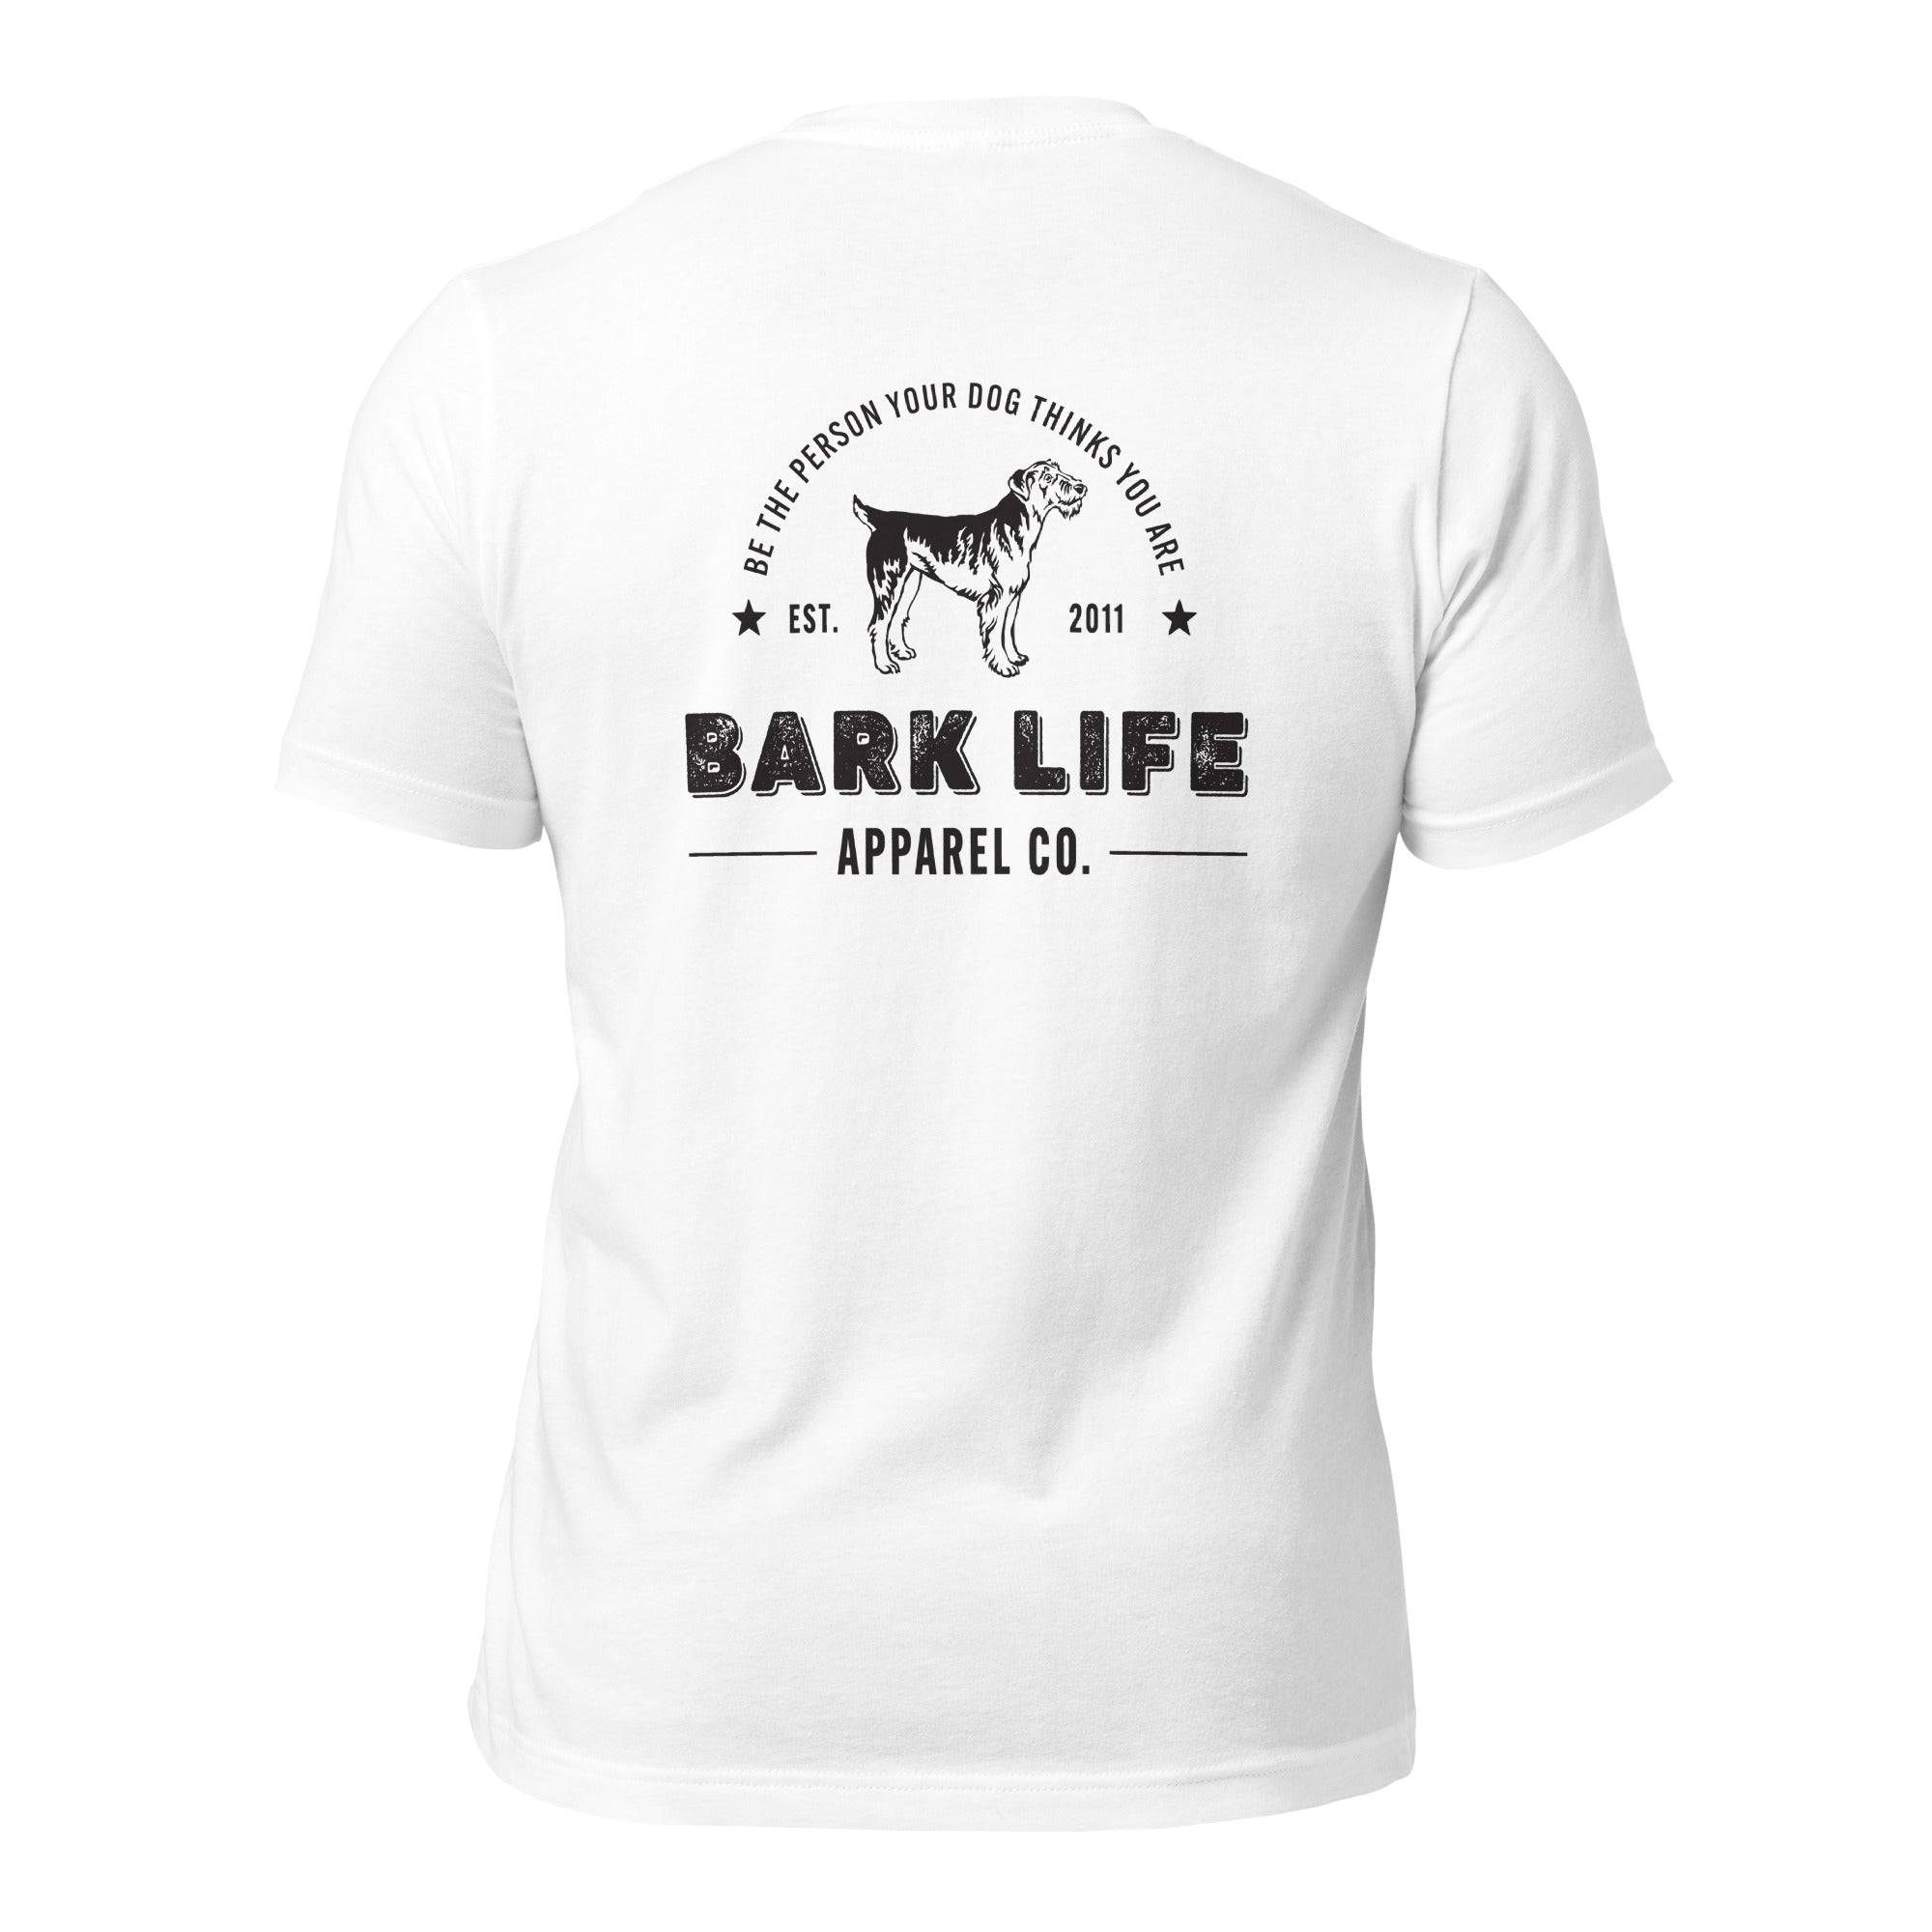 Airedale Terrier - Short Sleeve Cotton Tee  Shirt